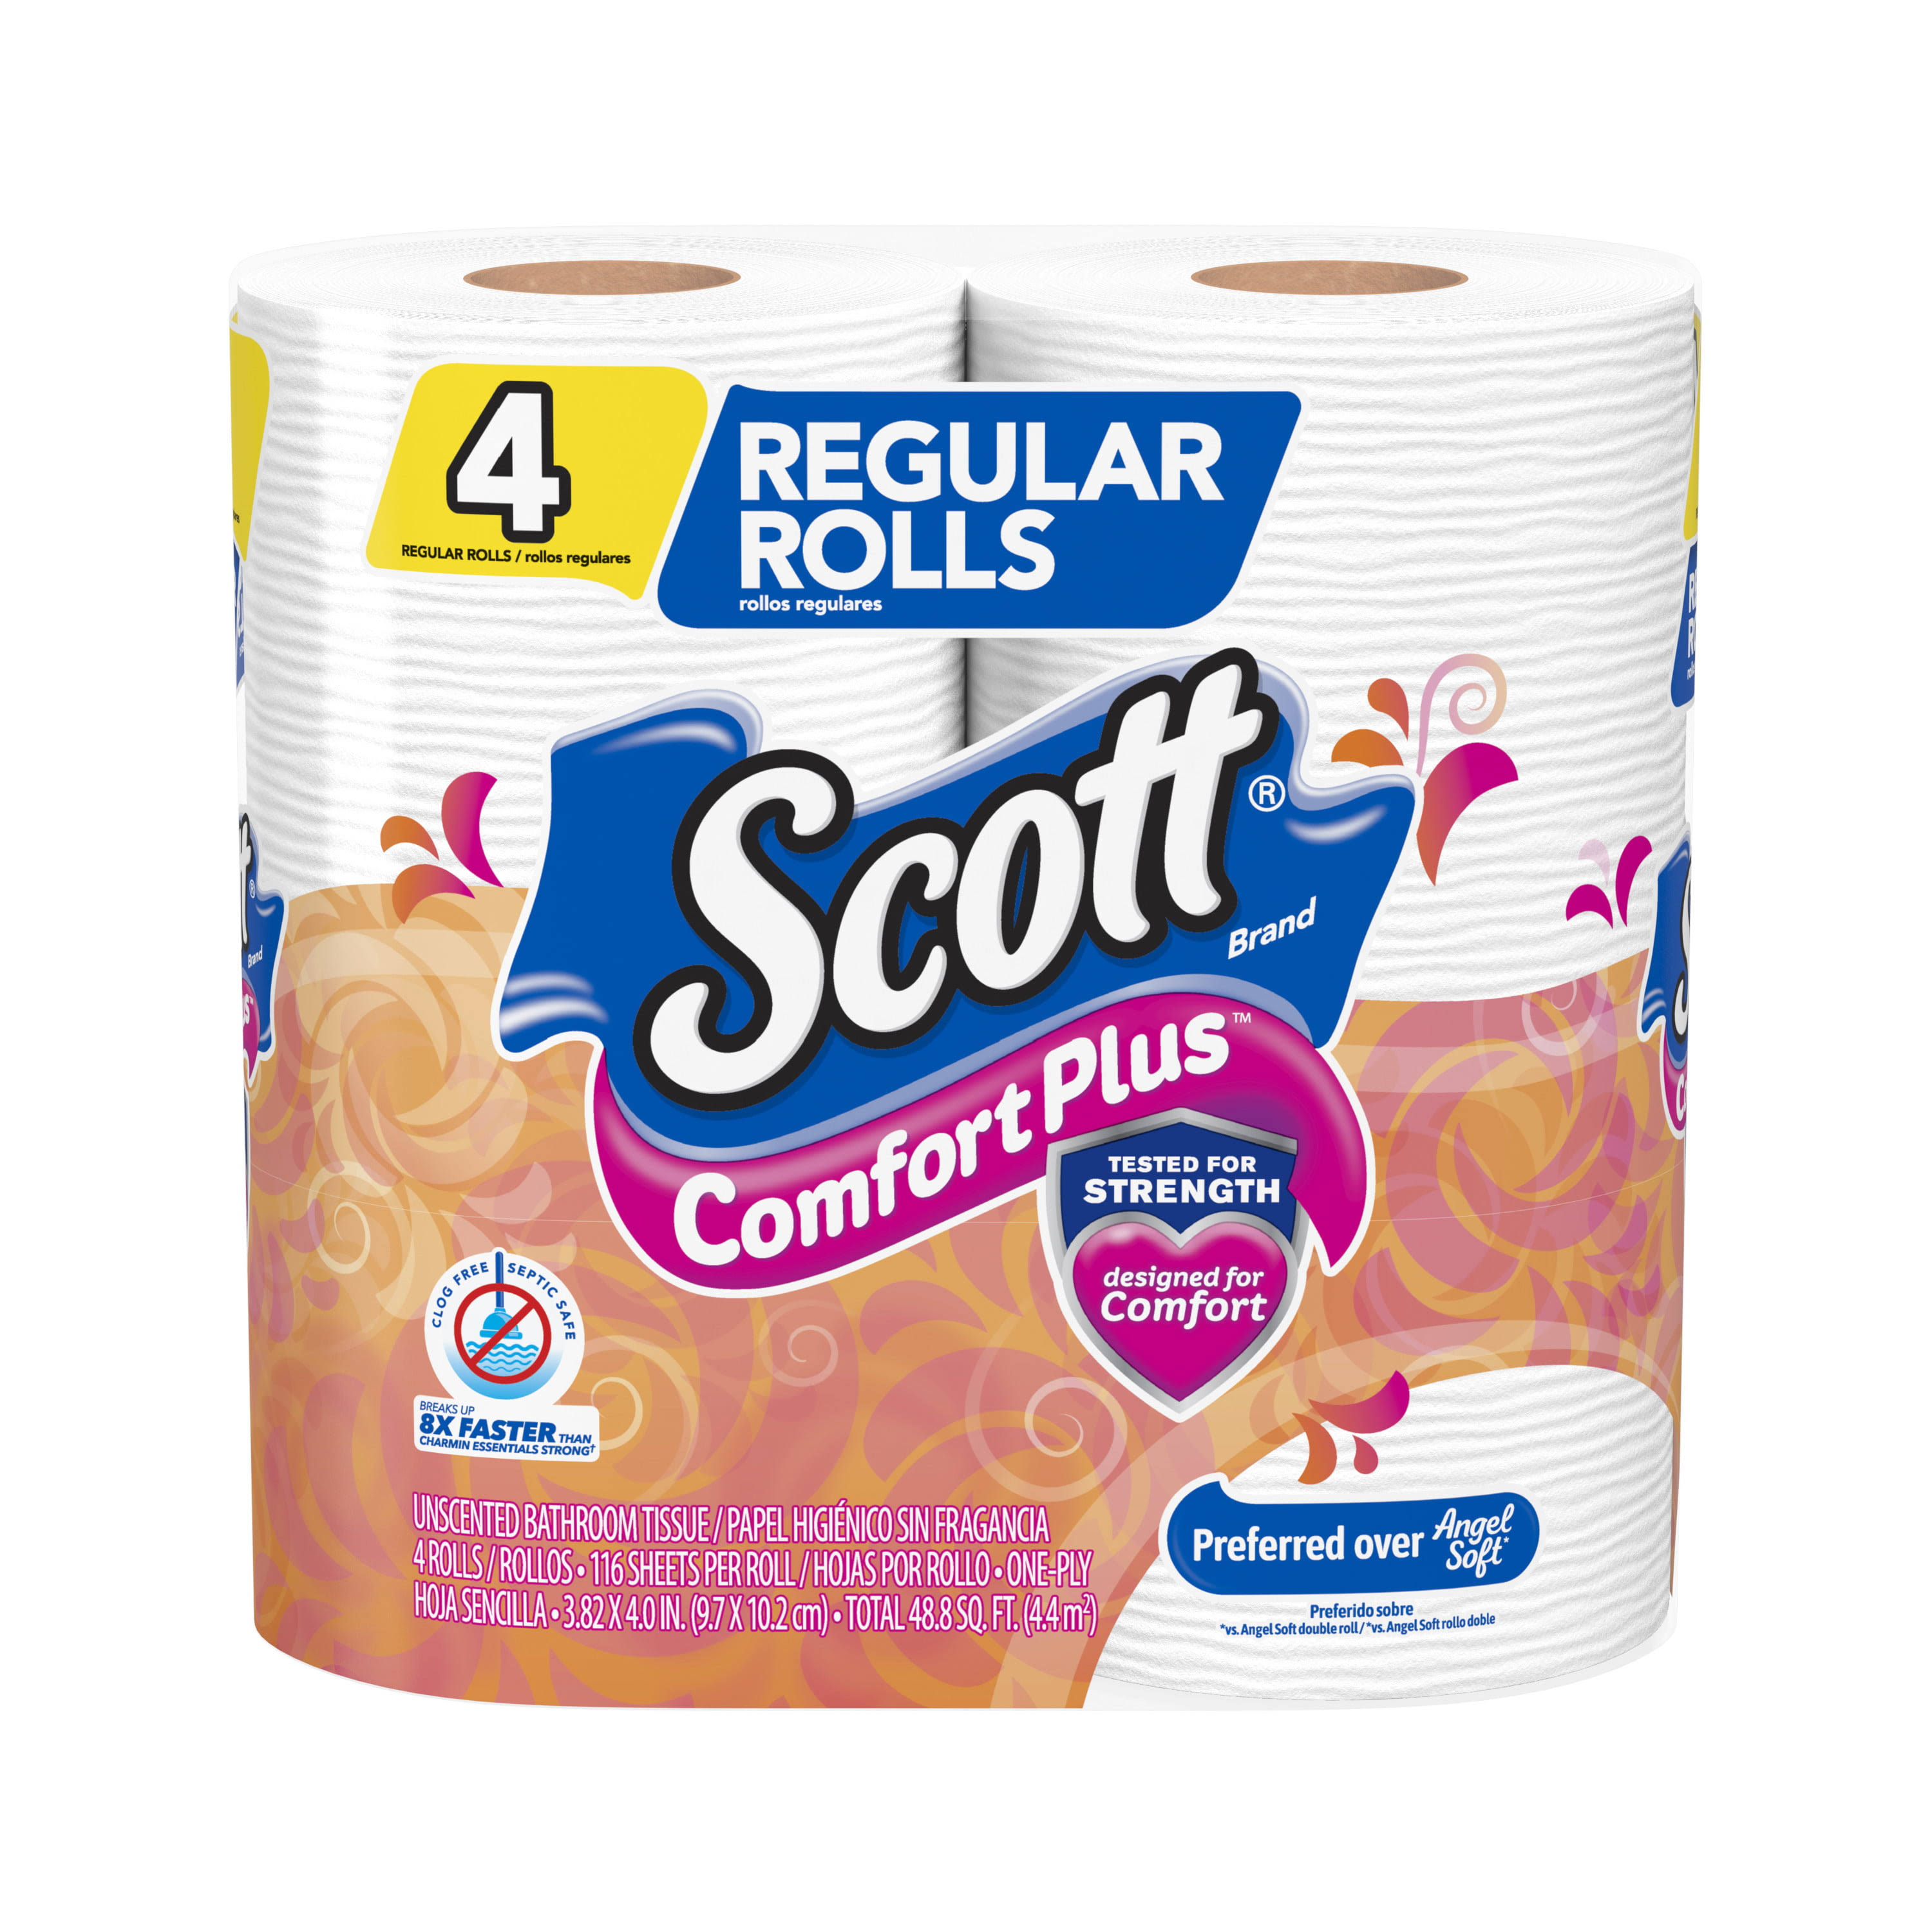 Scott Comfort Plus Toilet Paper (4 Rolls)